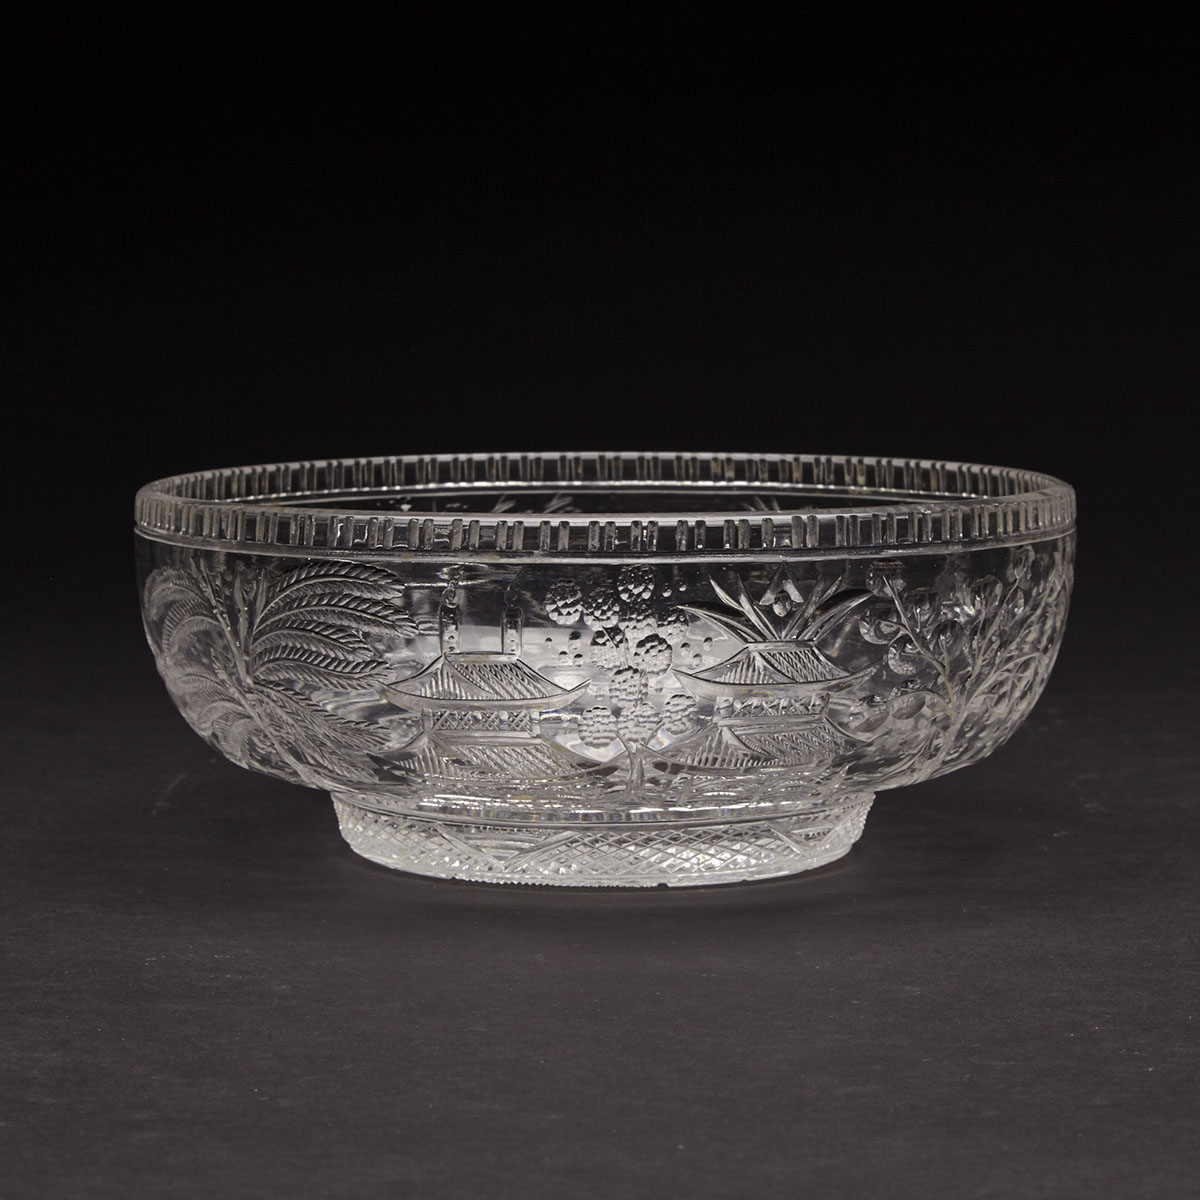 English ‘Rock Crystal’ Cut Glass Bowl, late 19th century